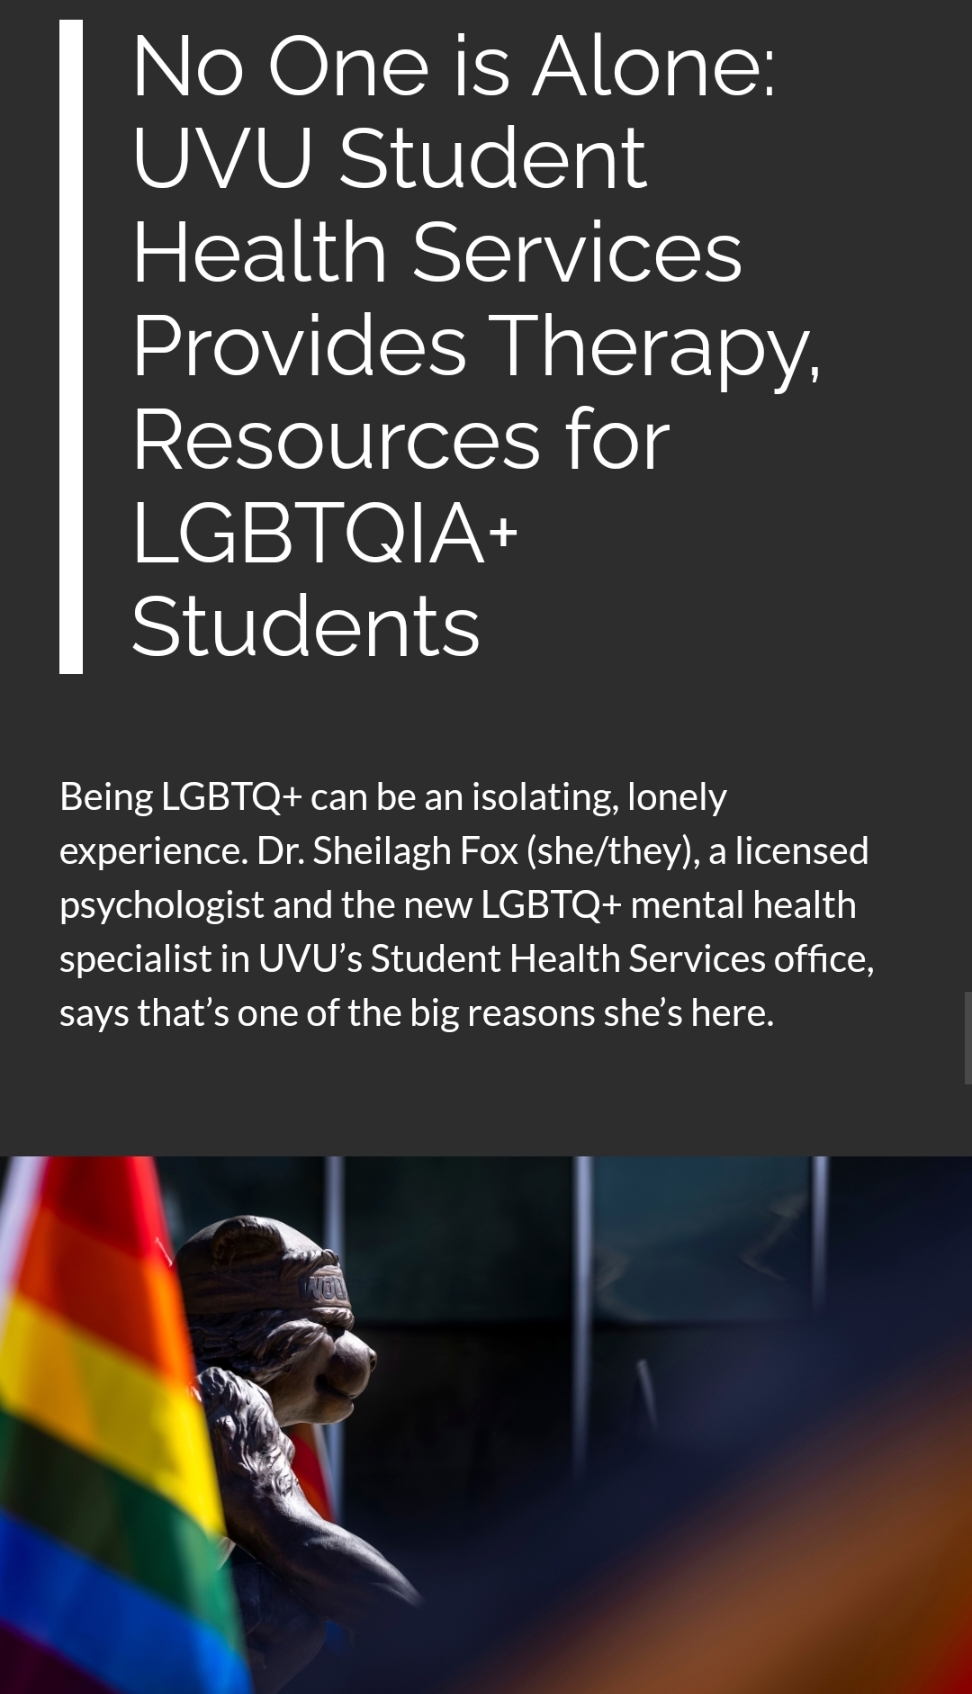 SHS's LGBTQ+ Mental Health Specialist, Dr. Sheilagh Fox, Interviewed by UVU